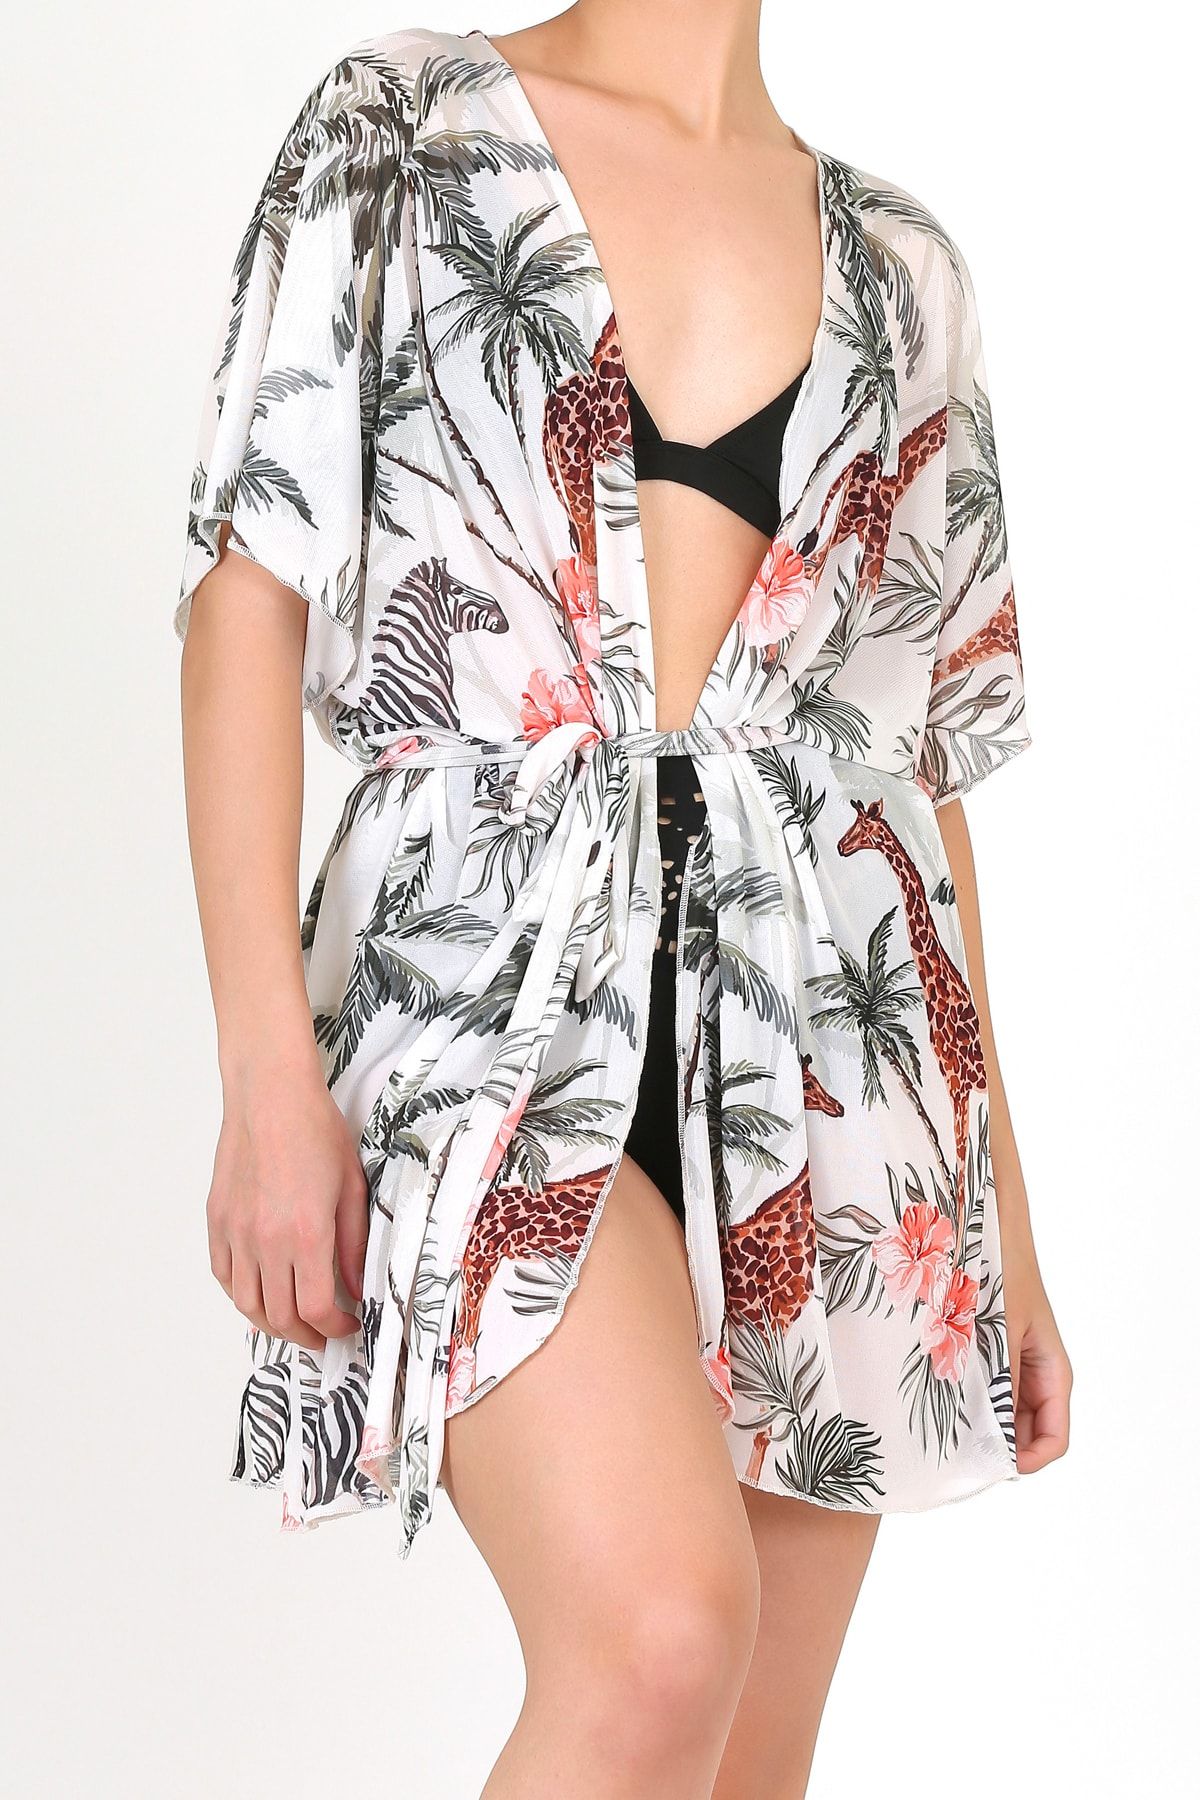 HAMUR Pareo Plaj Elbisesi Kimono Std Tropikal Beyaz